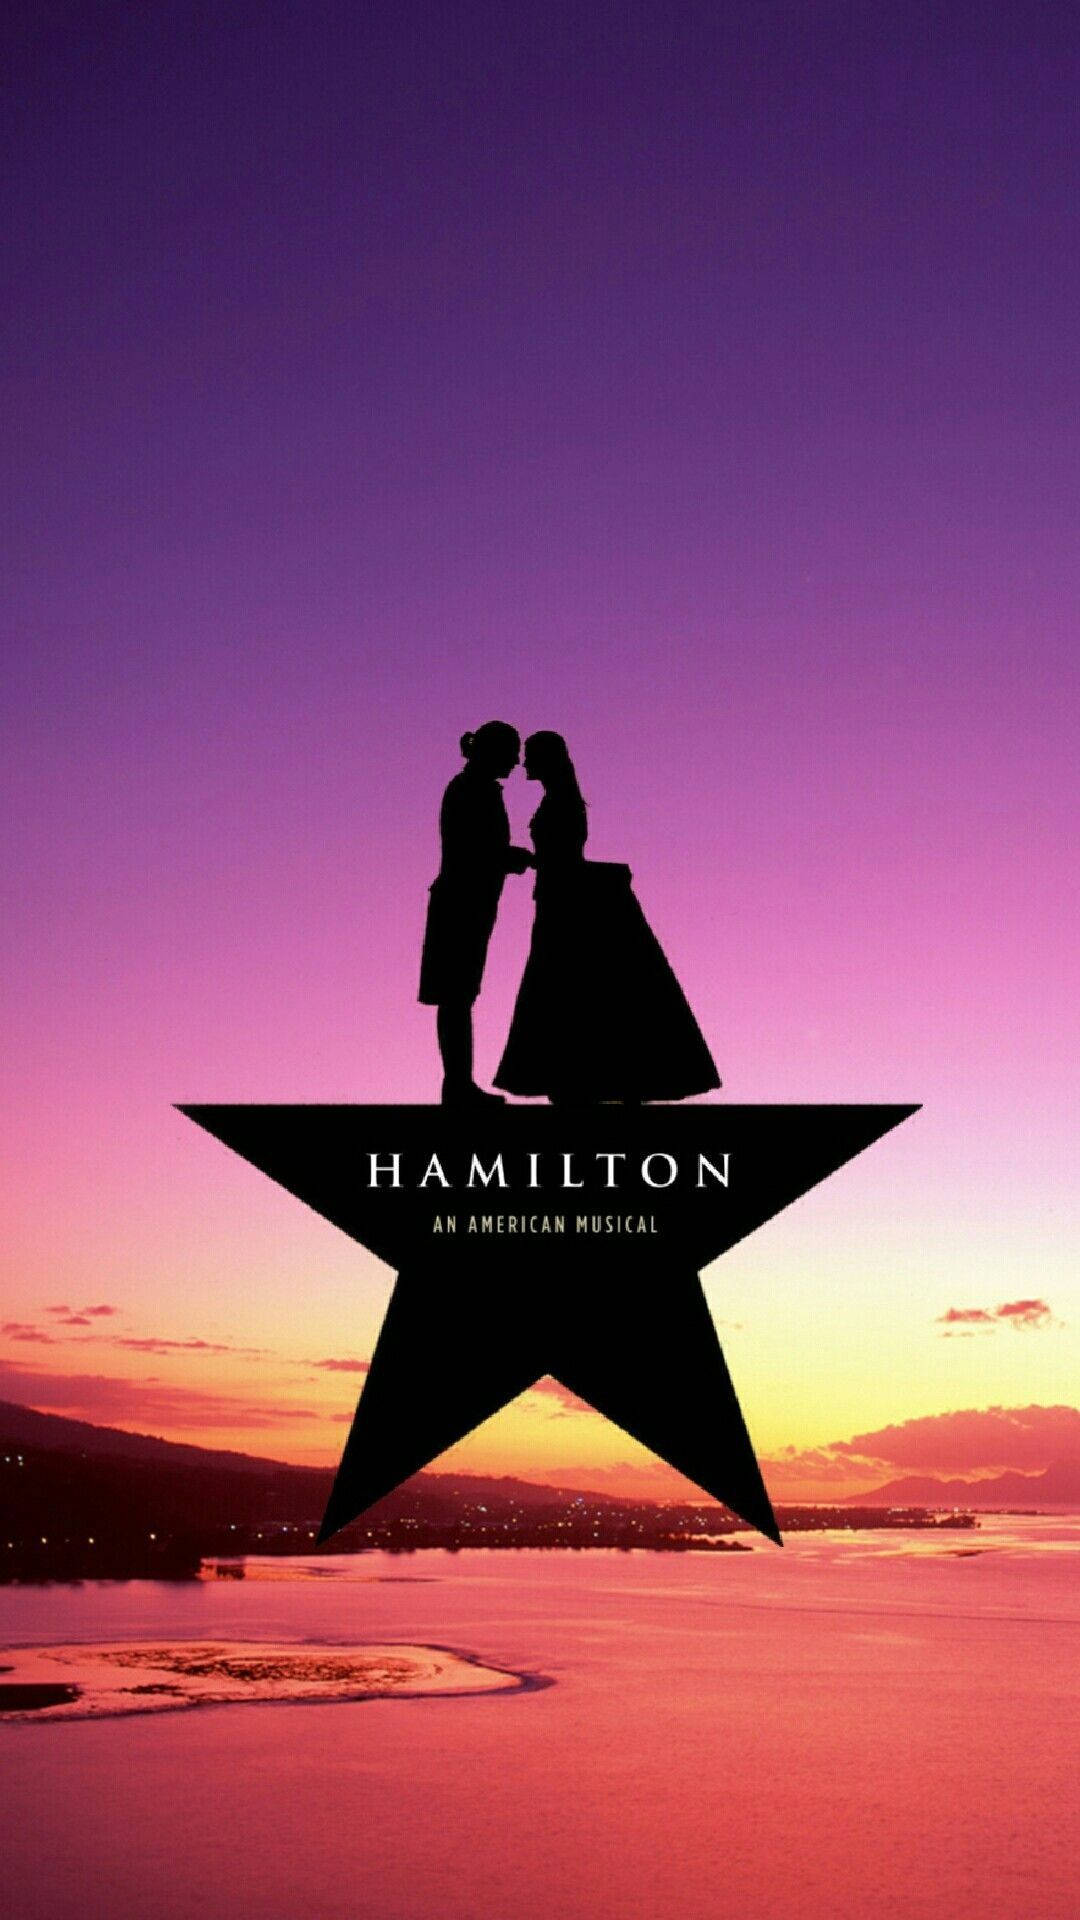 Download Hamilton Music Wallpaper